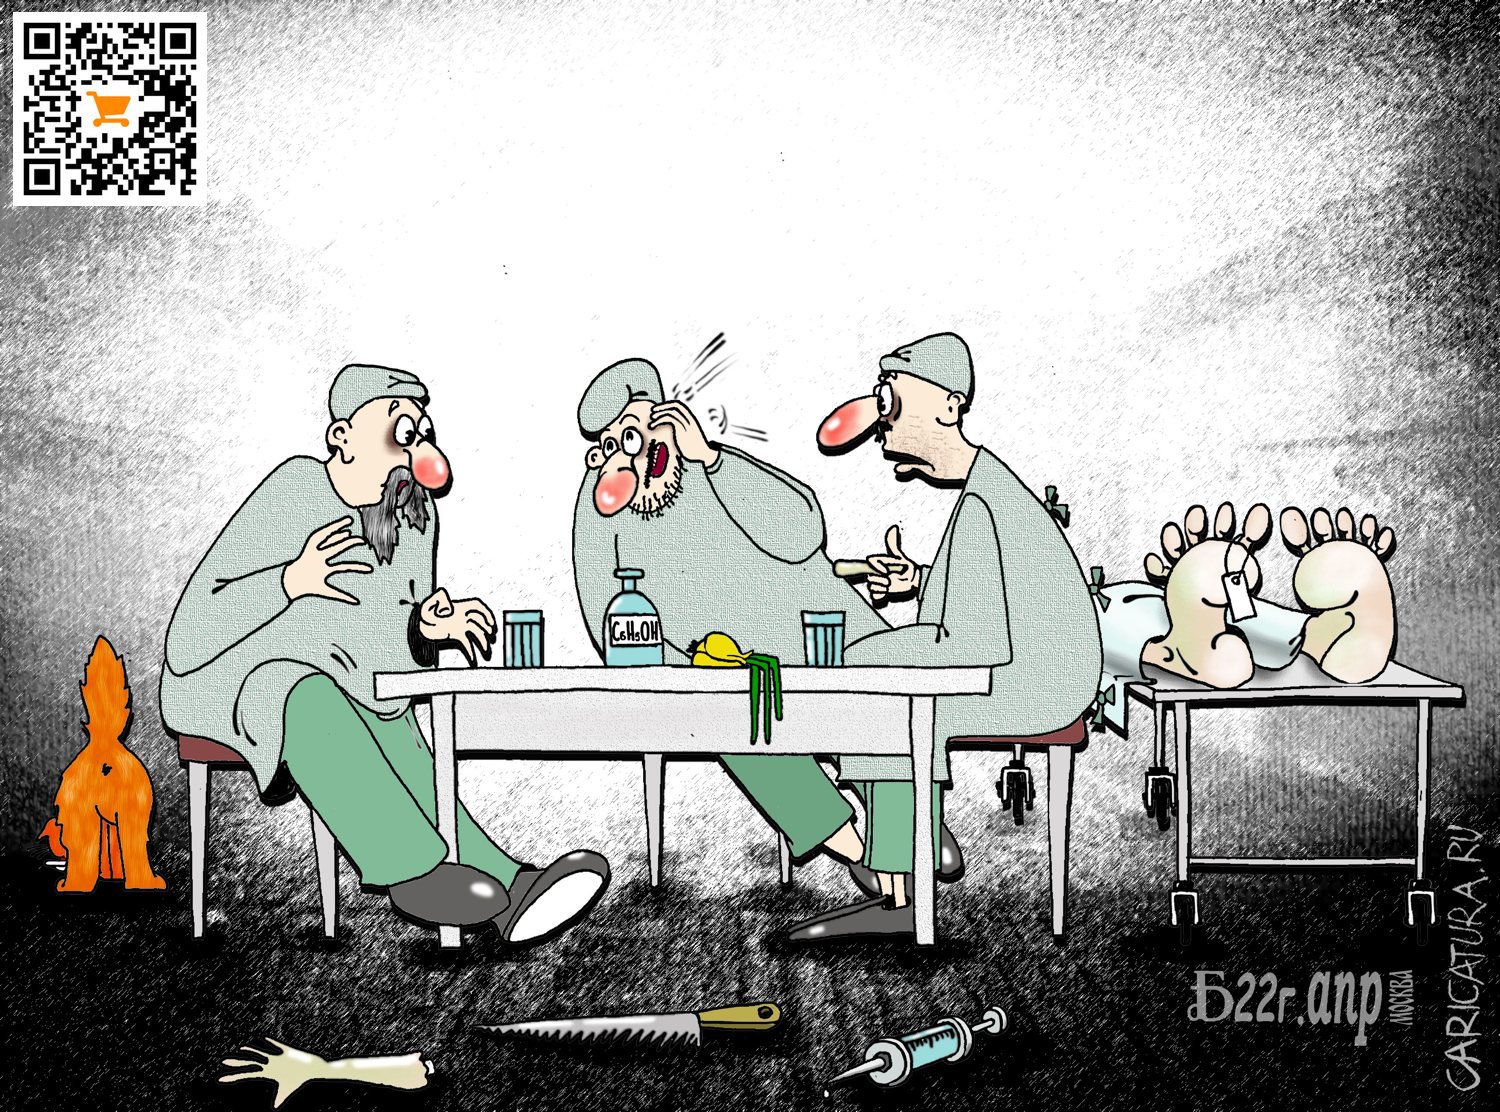 Карикатура "Про патологоанатомов на привале", Борис Демин